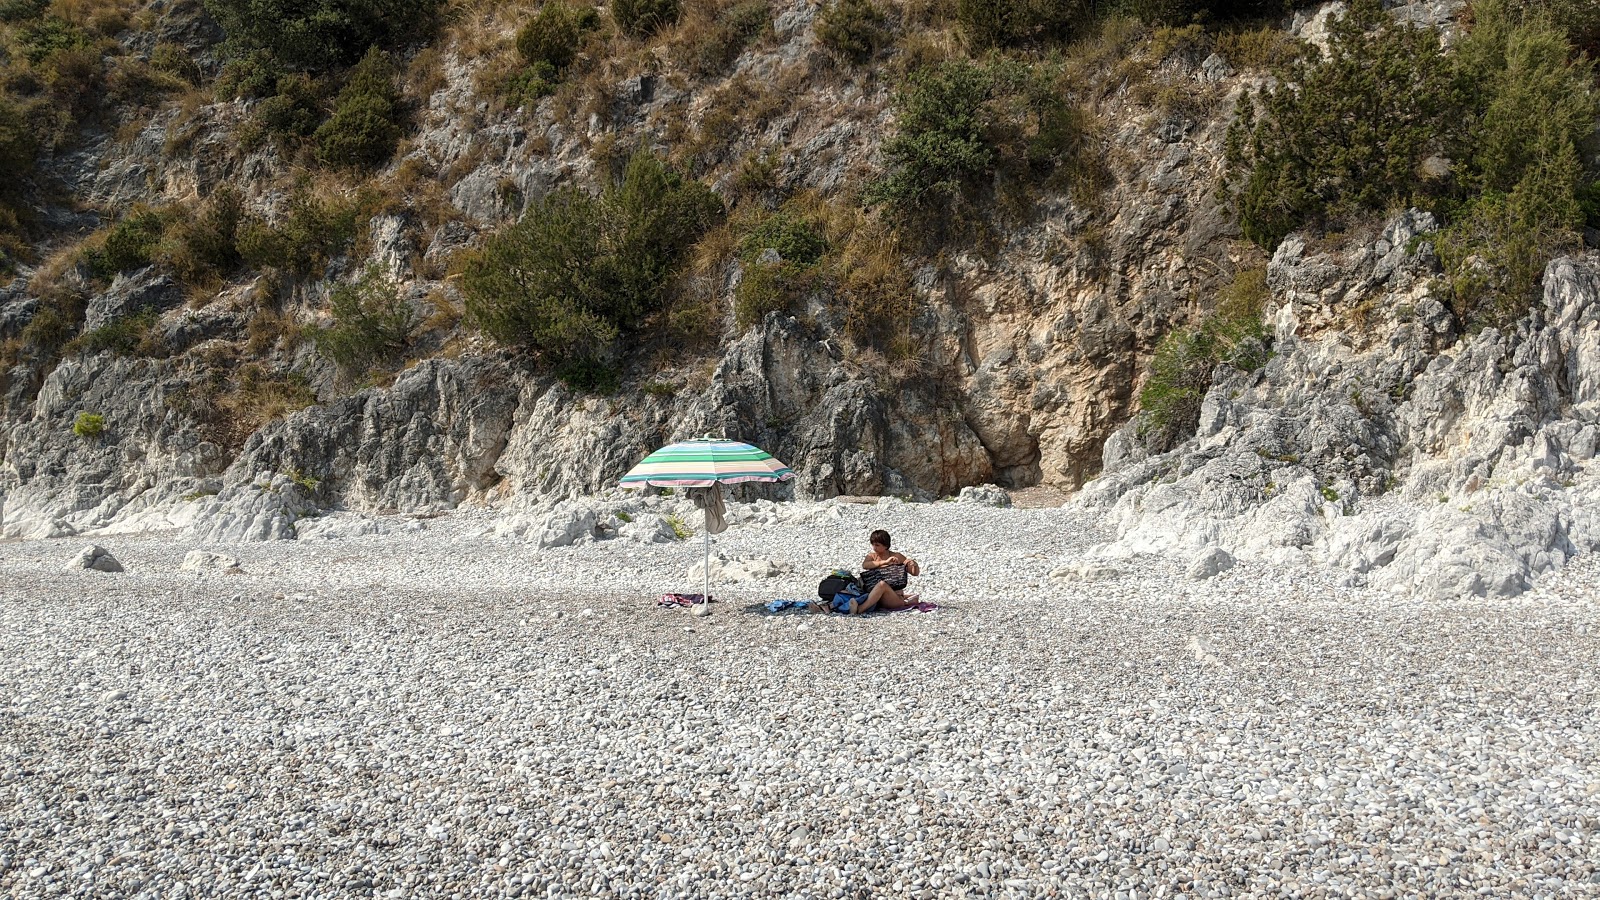 Spiaggia della Sciabica II'in fotoğrafı doğrudan plaj ile birlikte